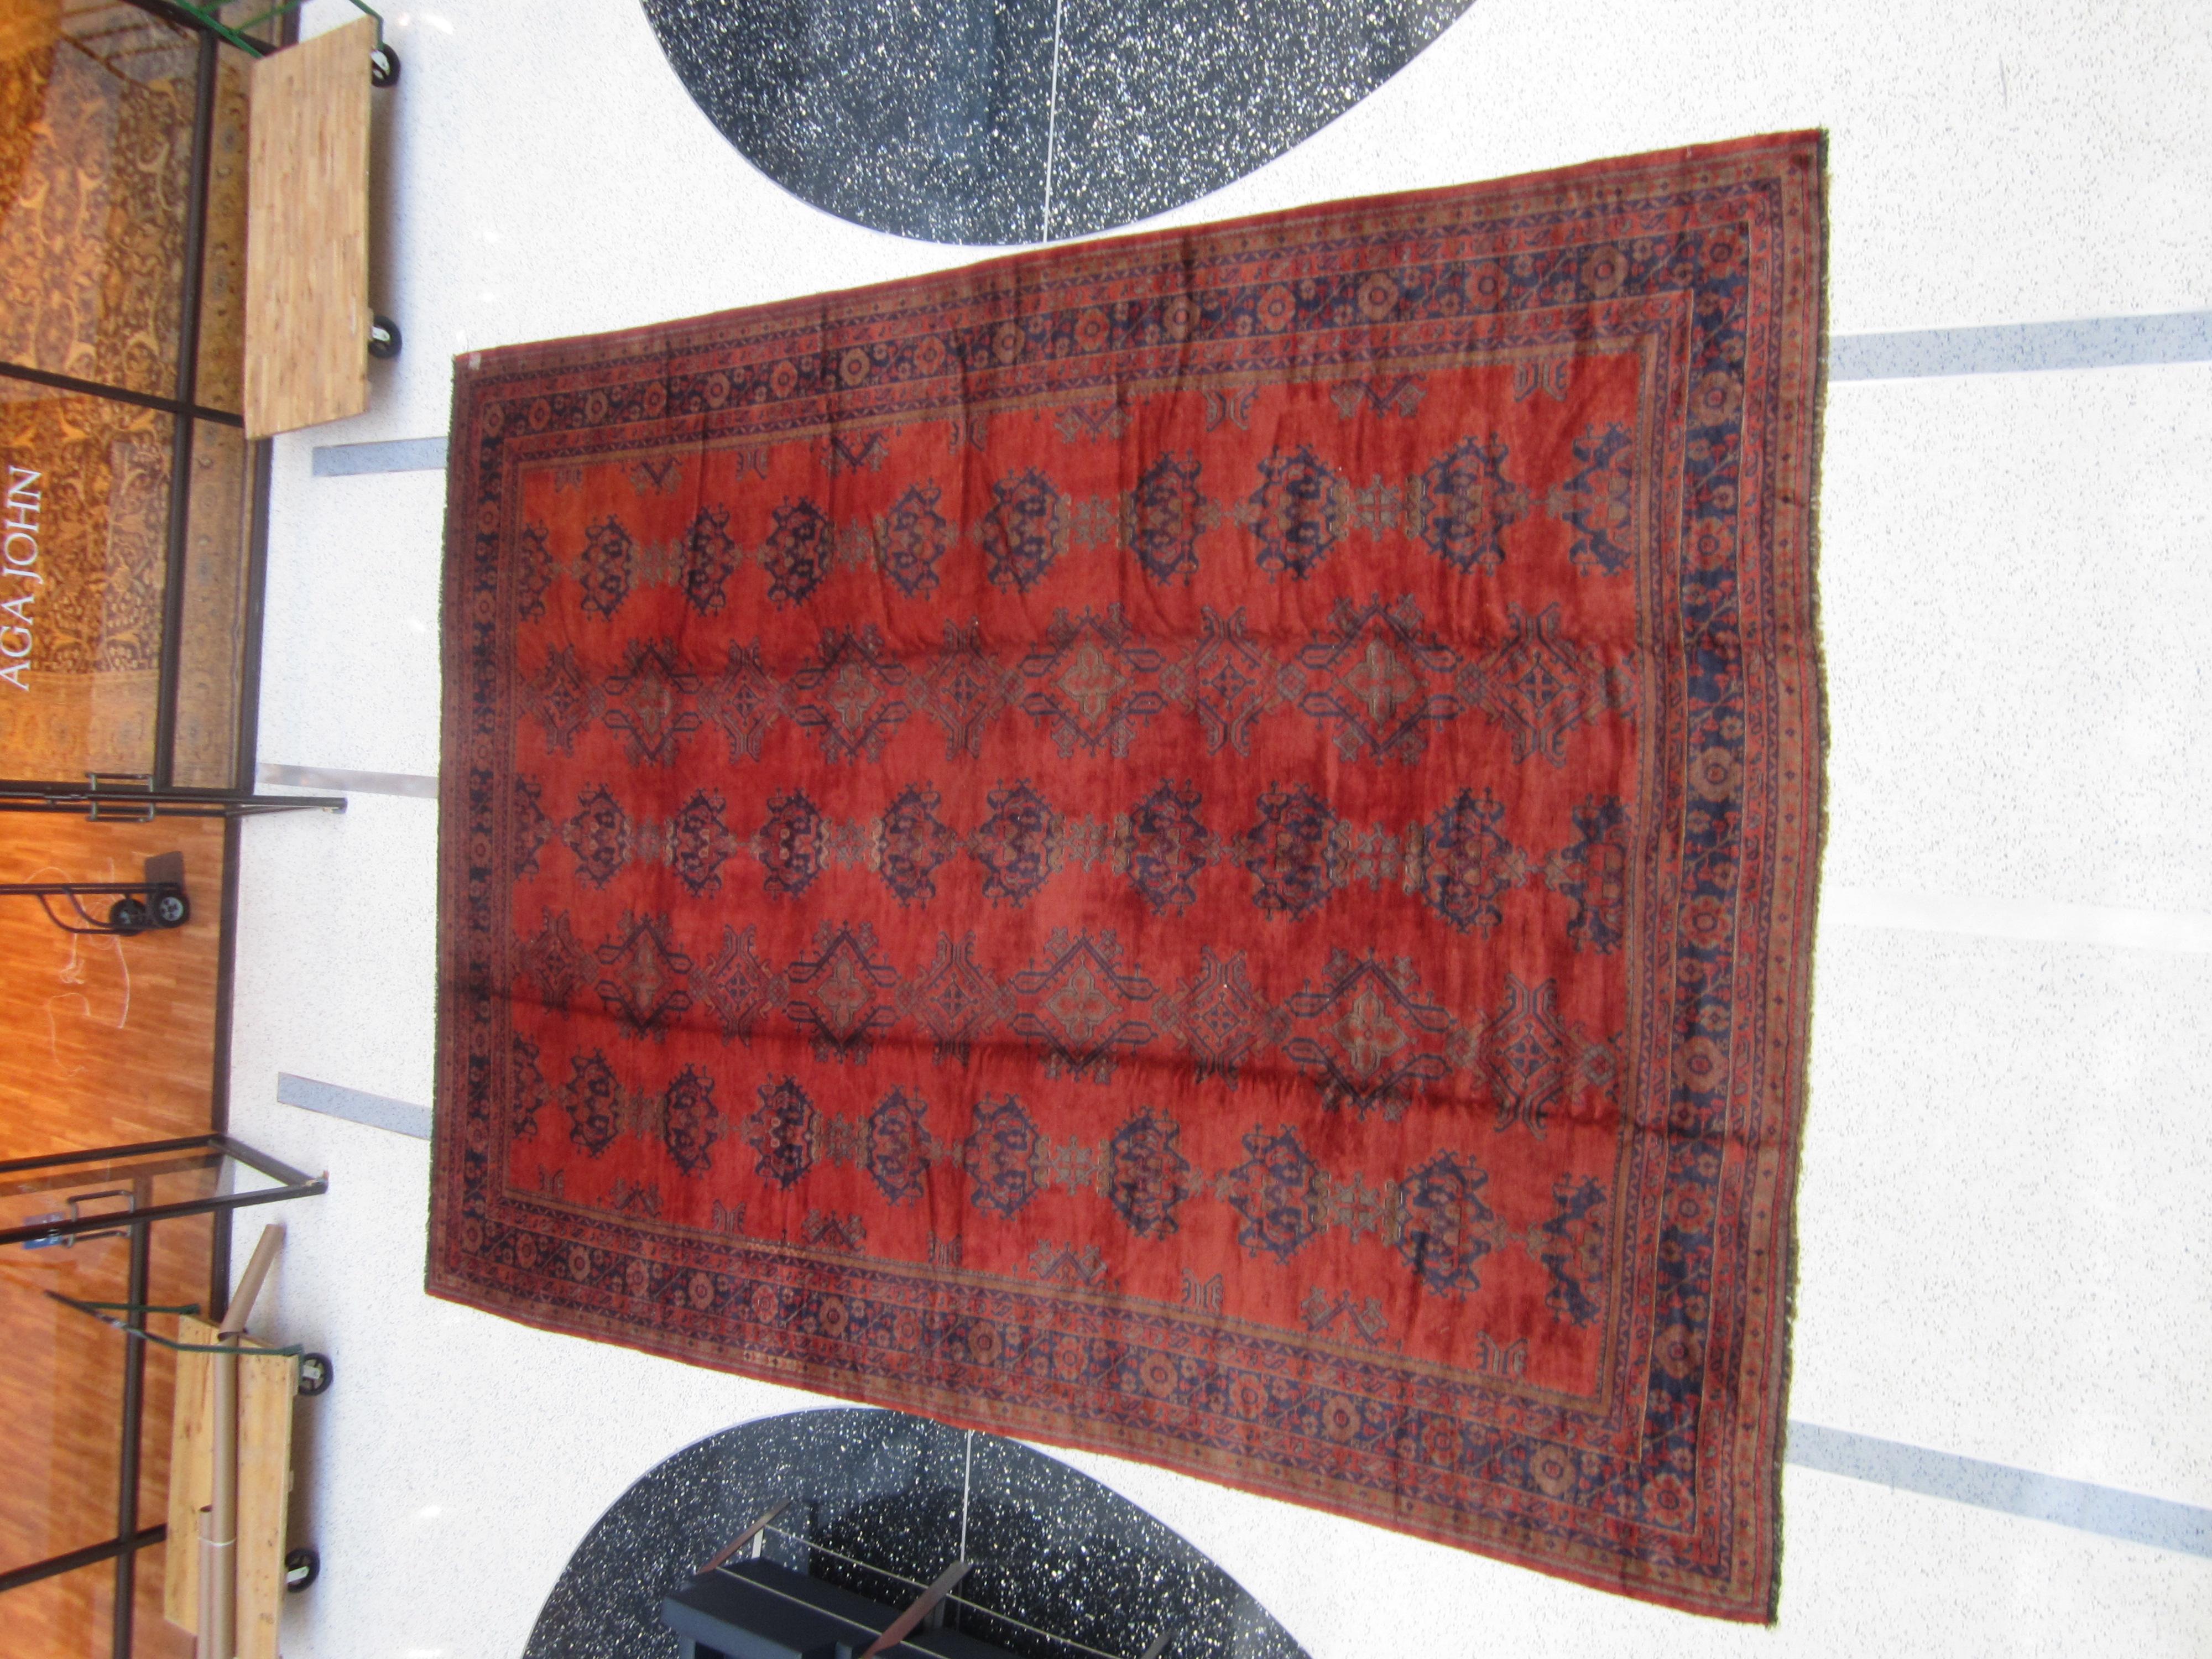 Antique Turkish Oushak rug

Measurement: 14'3